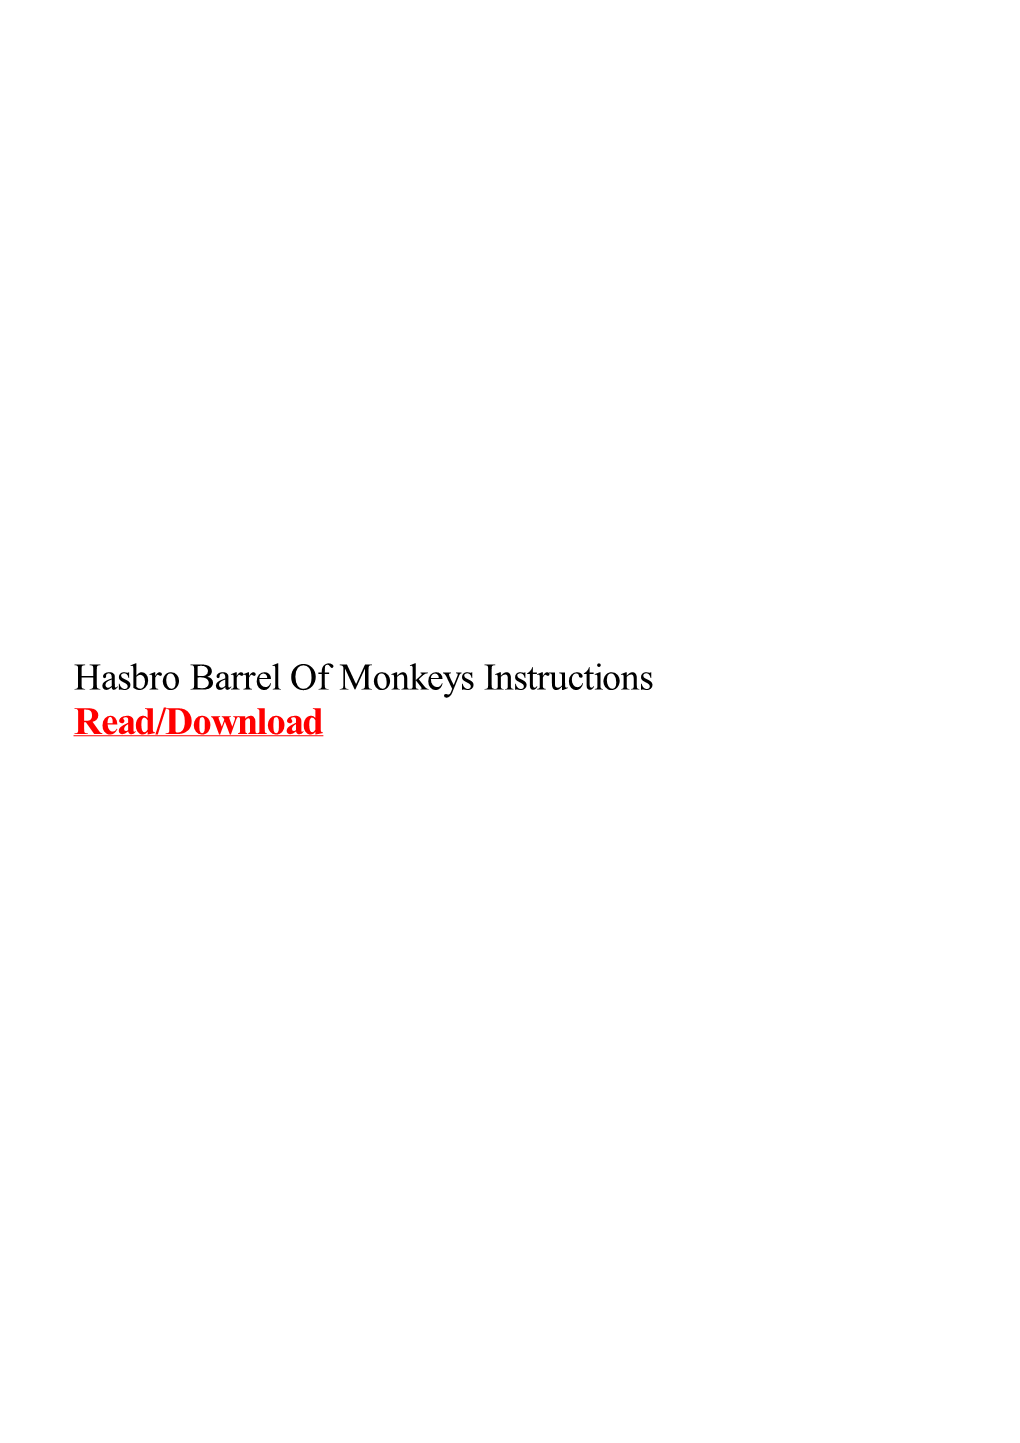 Hasbro Barrel of Monkeys Instructions.Pdf